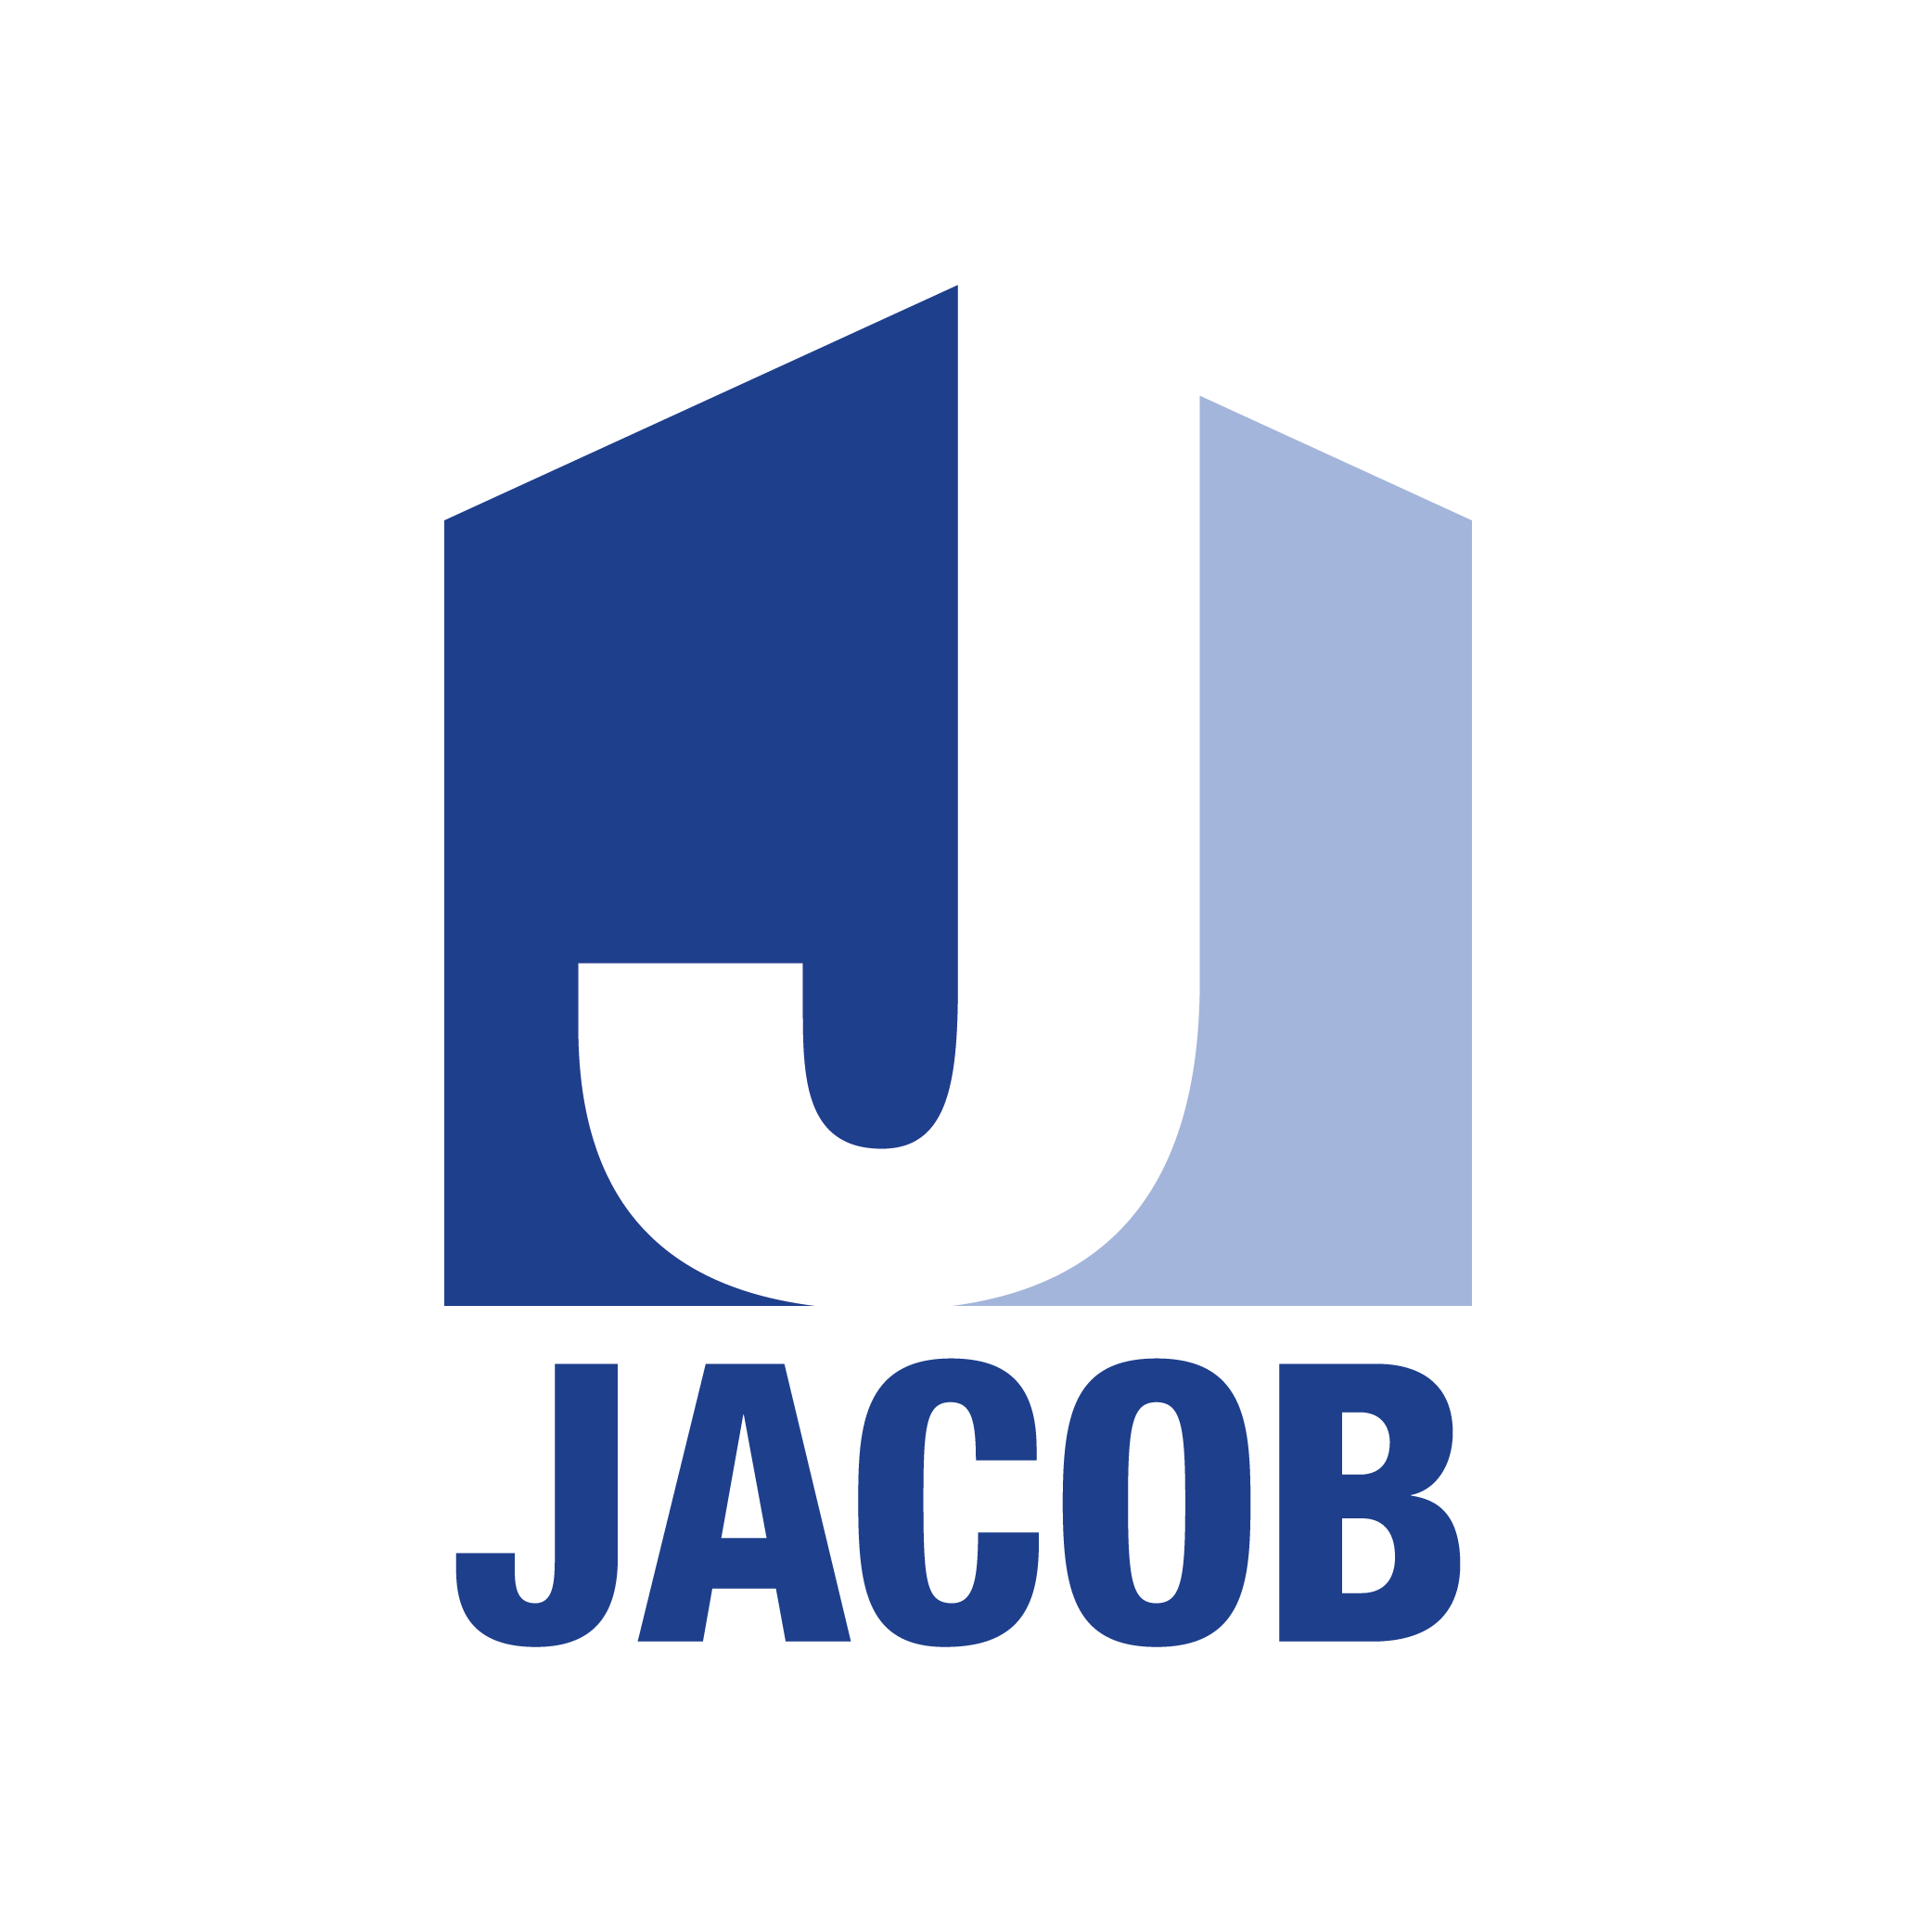 Jacob Verwaltungsgesellschaft mbH